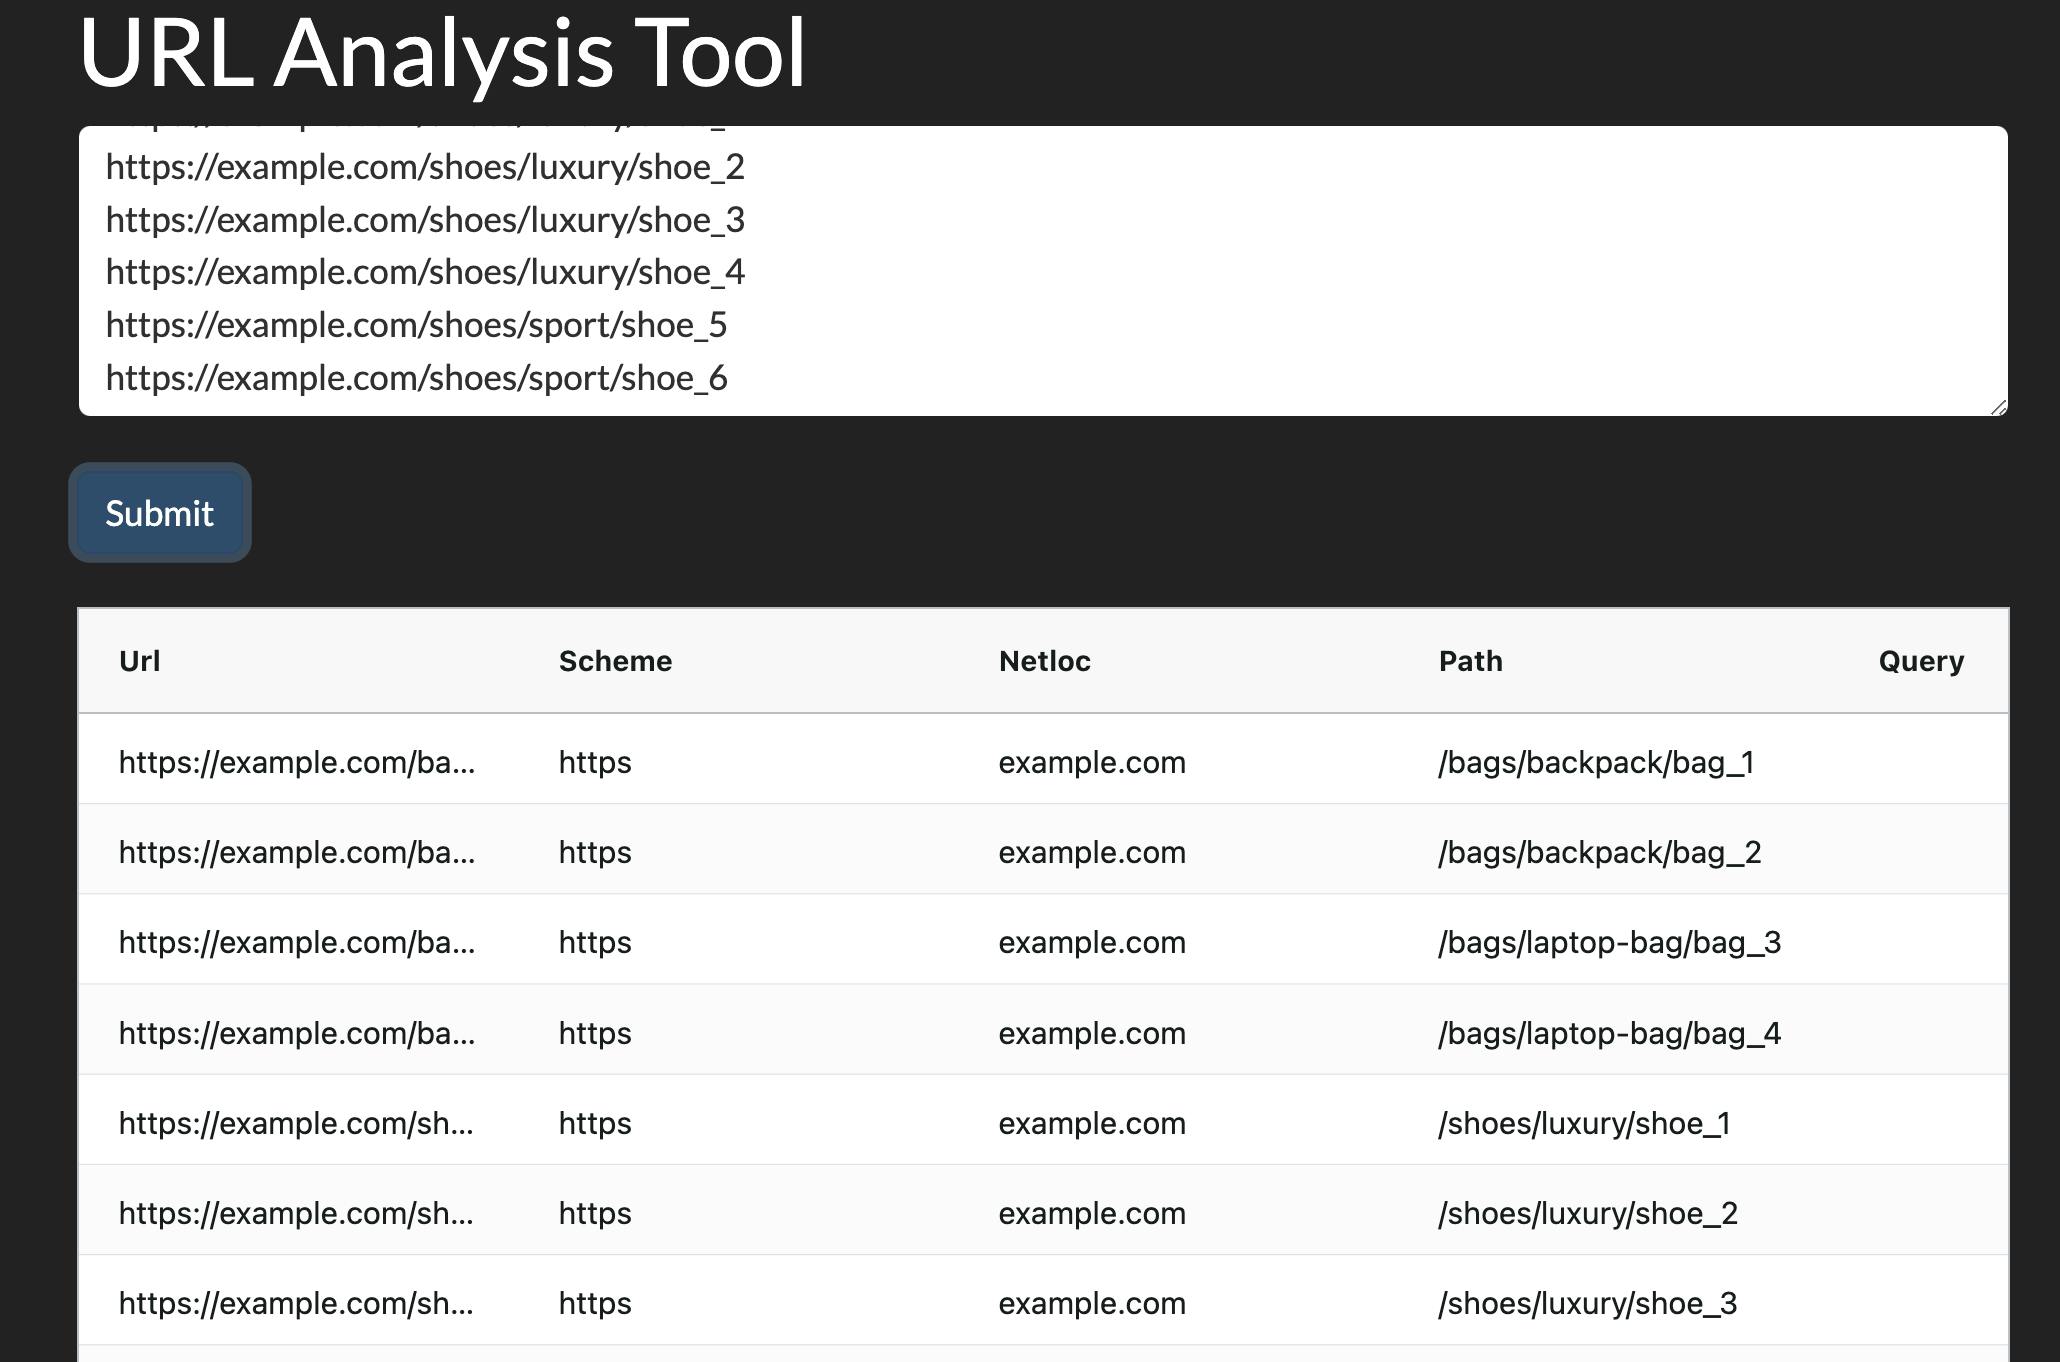 URL Analysis Tool created with Dash